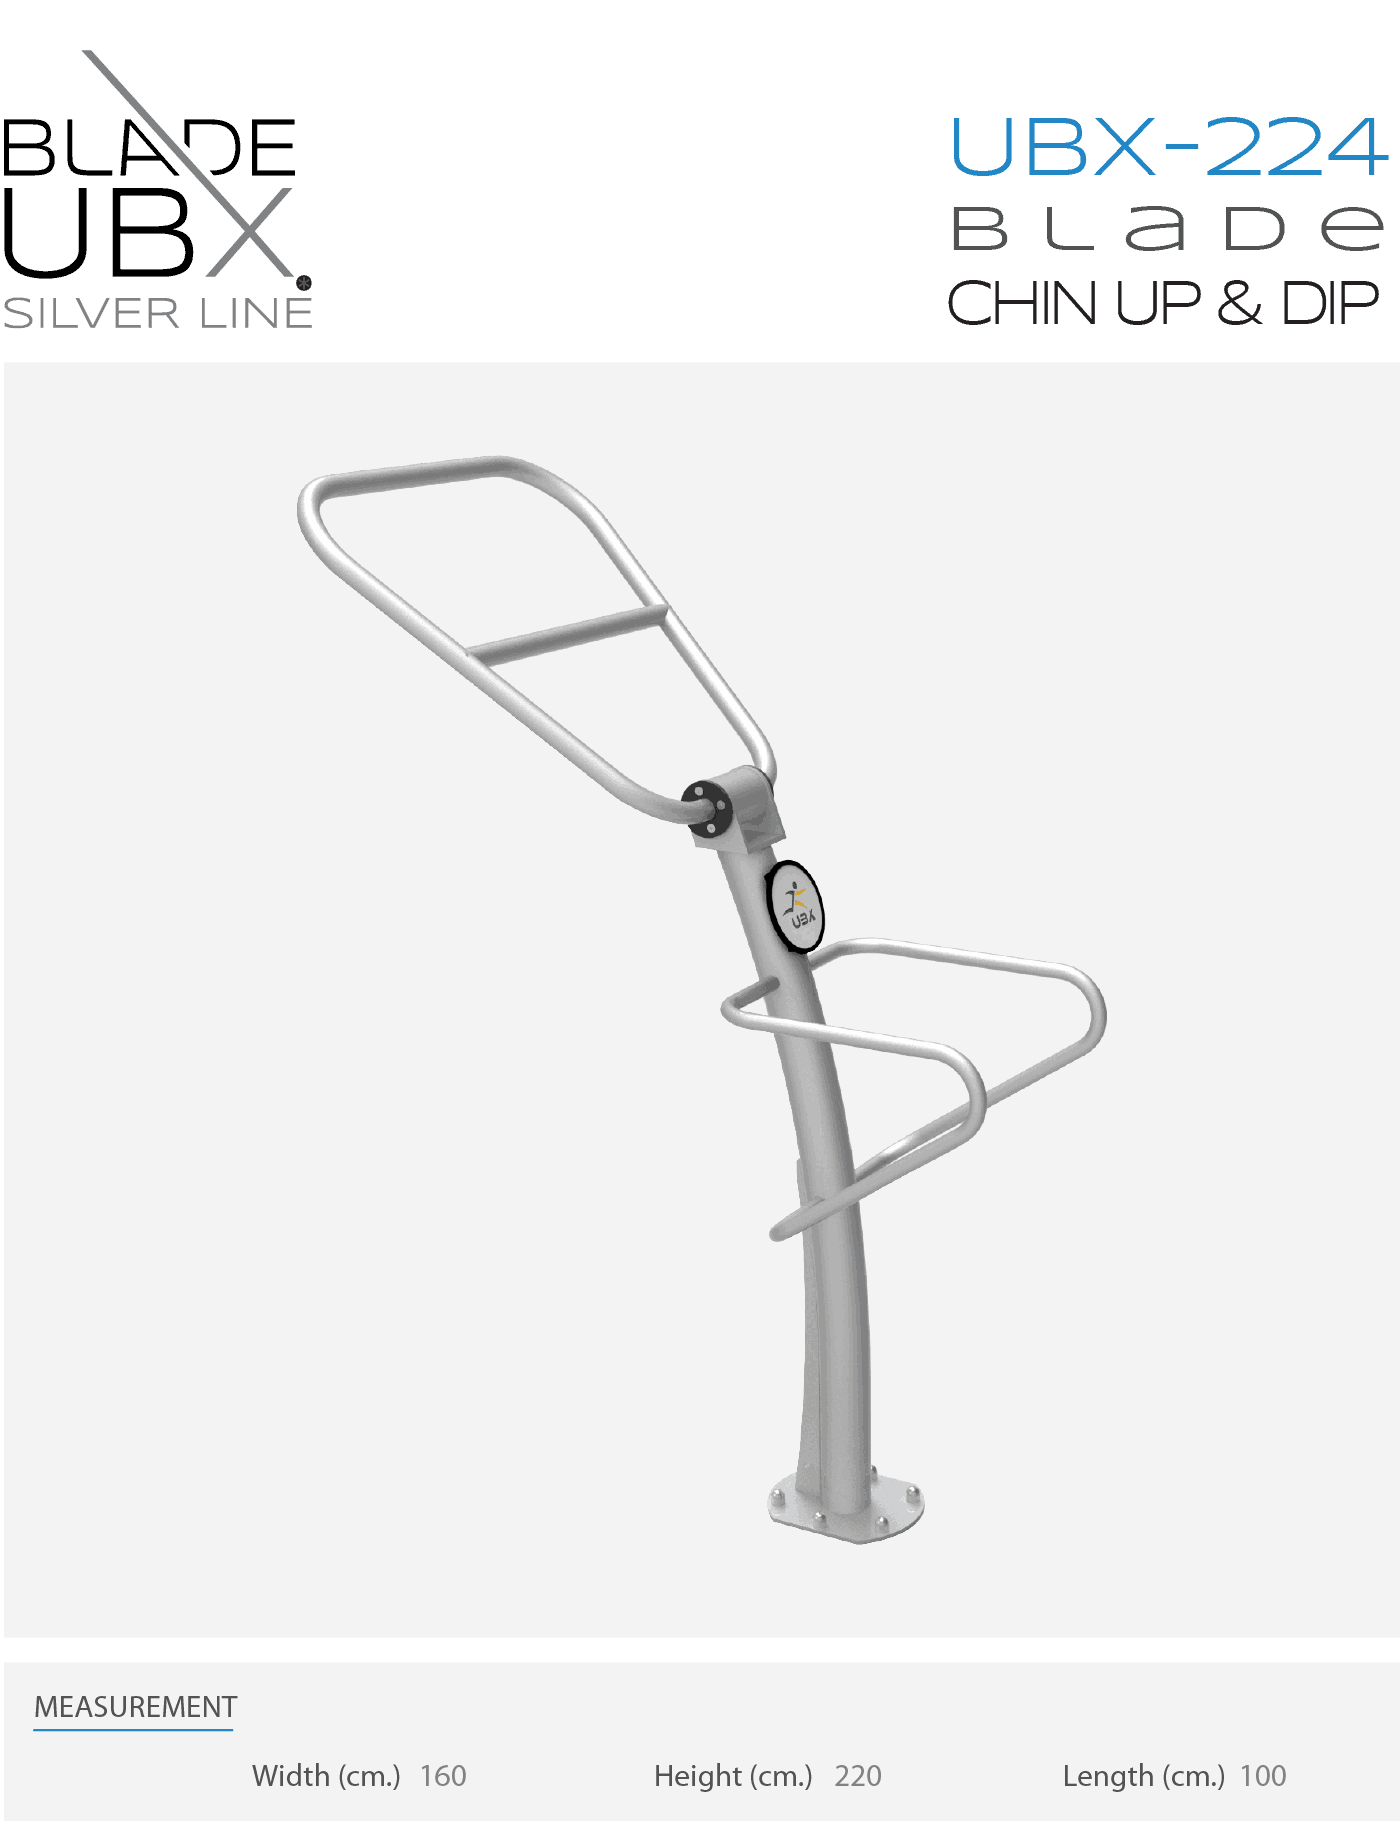 ubx-224 blade chin up and dip - אורבניקס - מתקן כושר - מתח משולב מקבילים